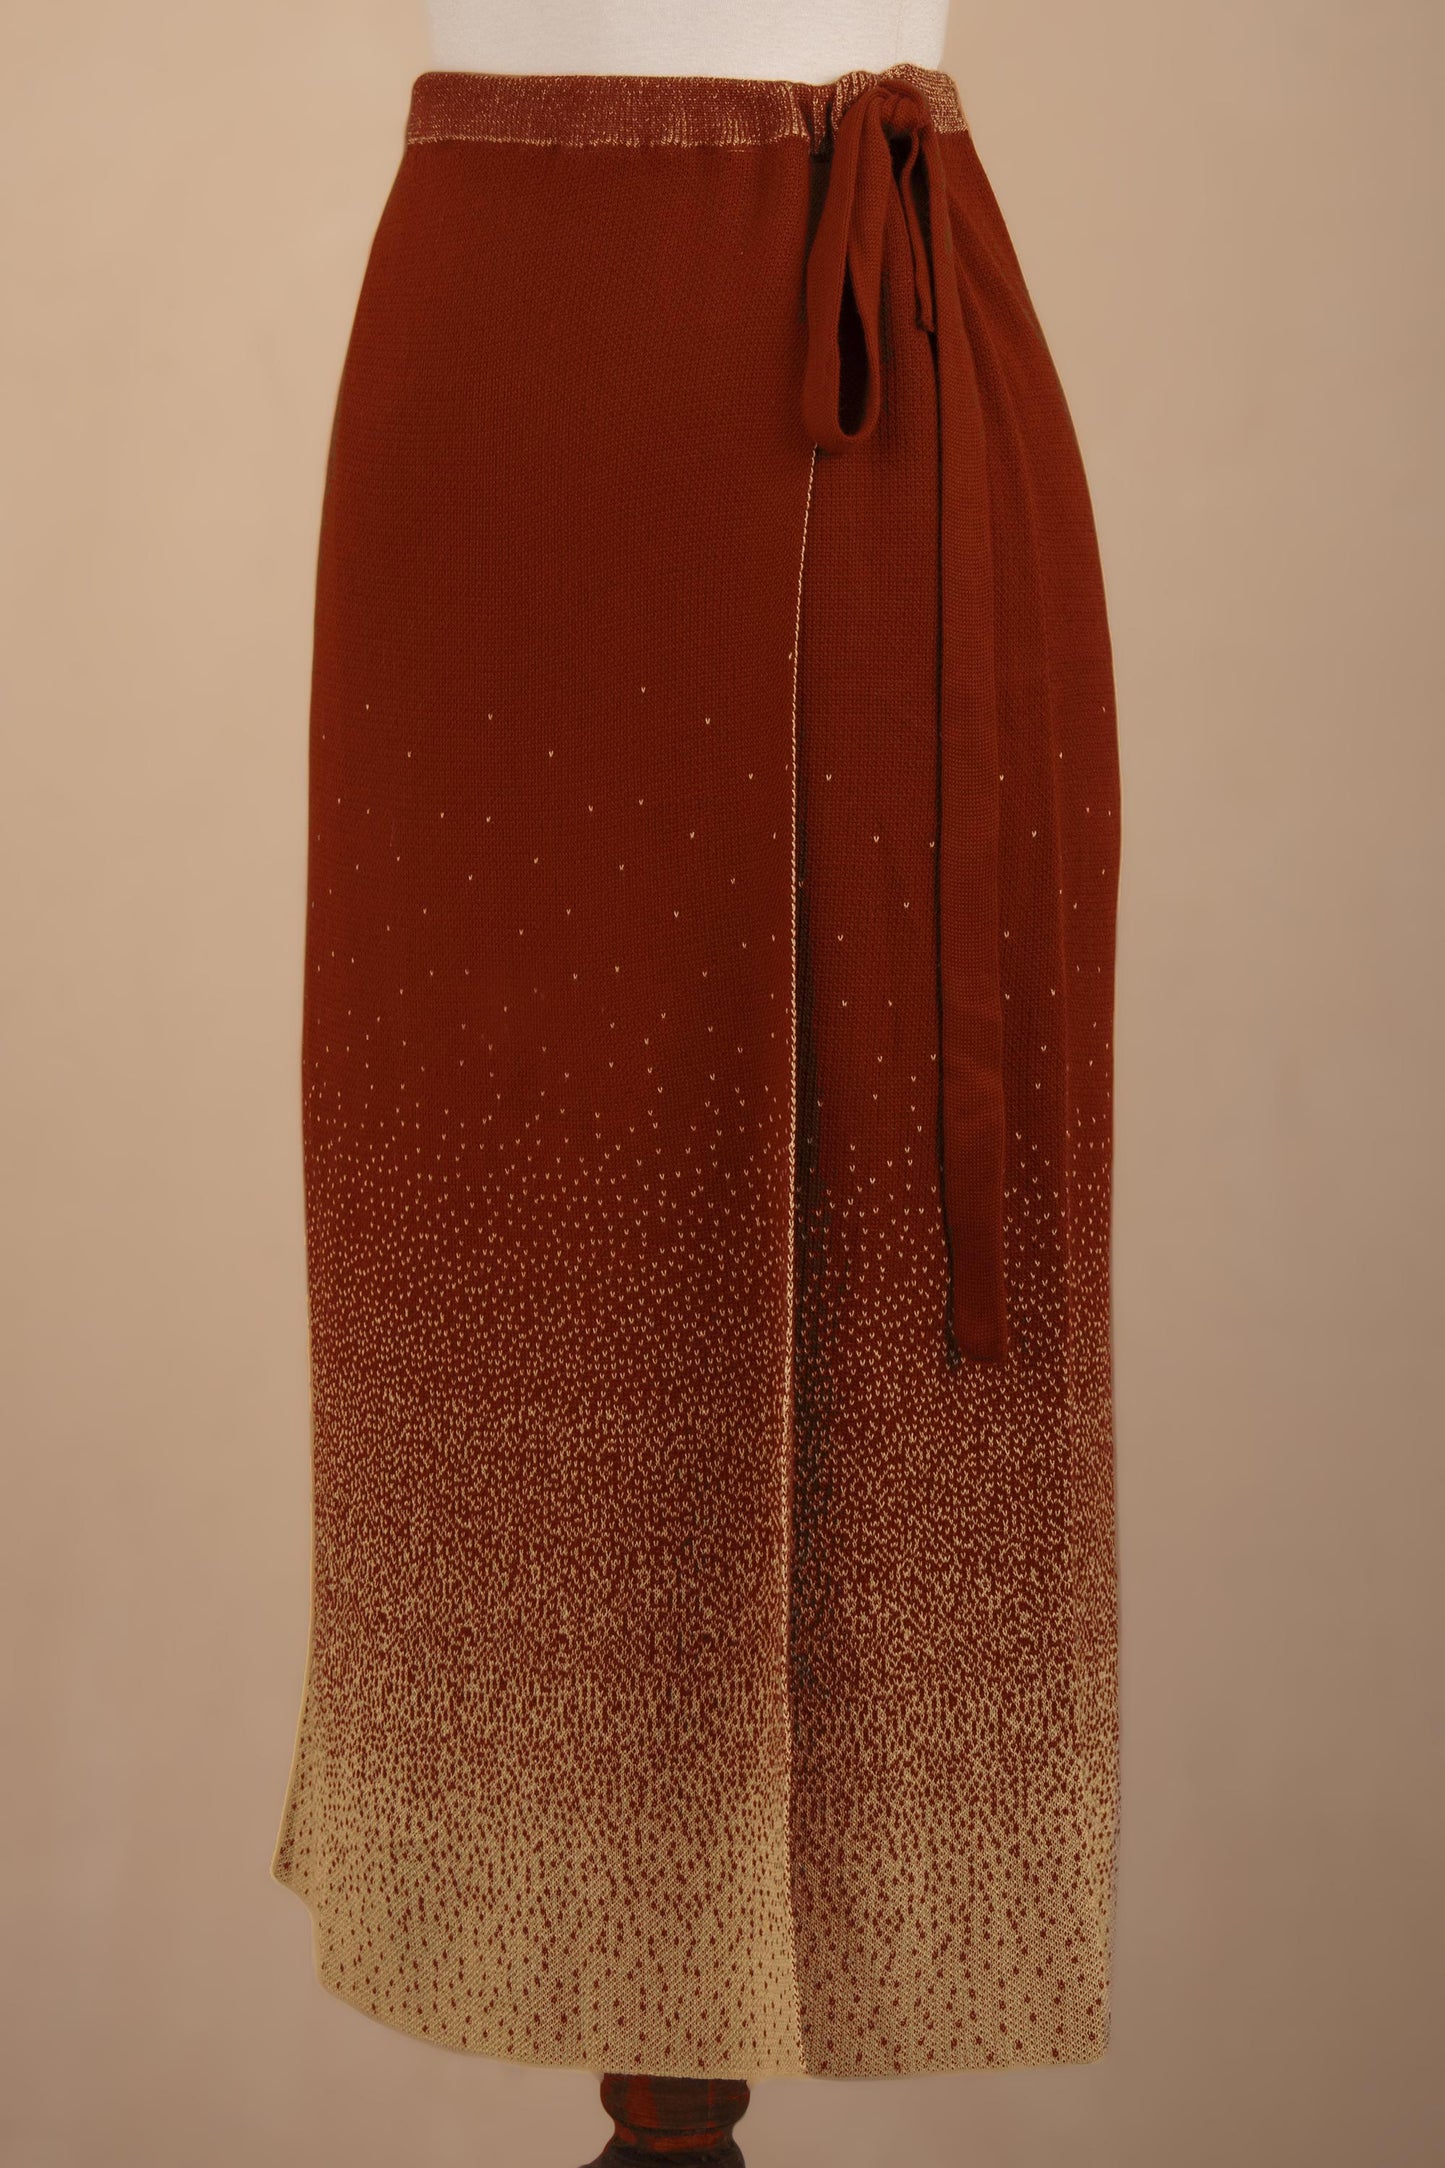 Thanta Degrade in Brown Organic Cotton Knit Wrap Degrade Russet Wrap Skirt from Peru